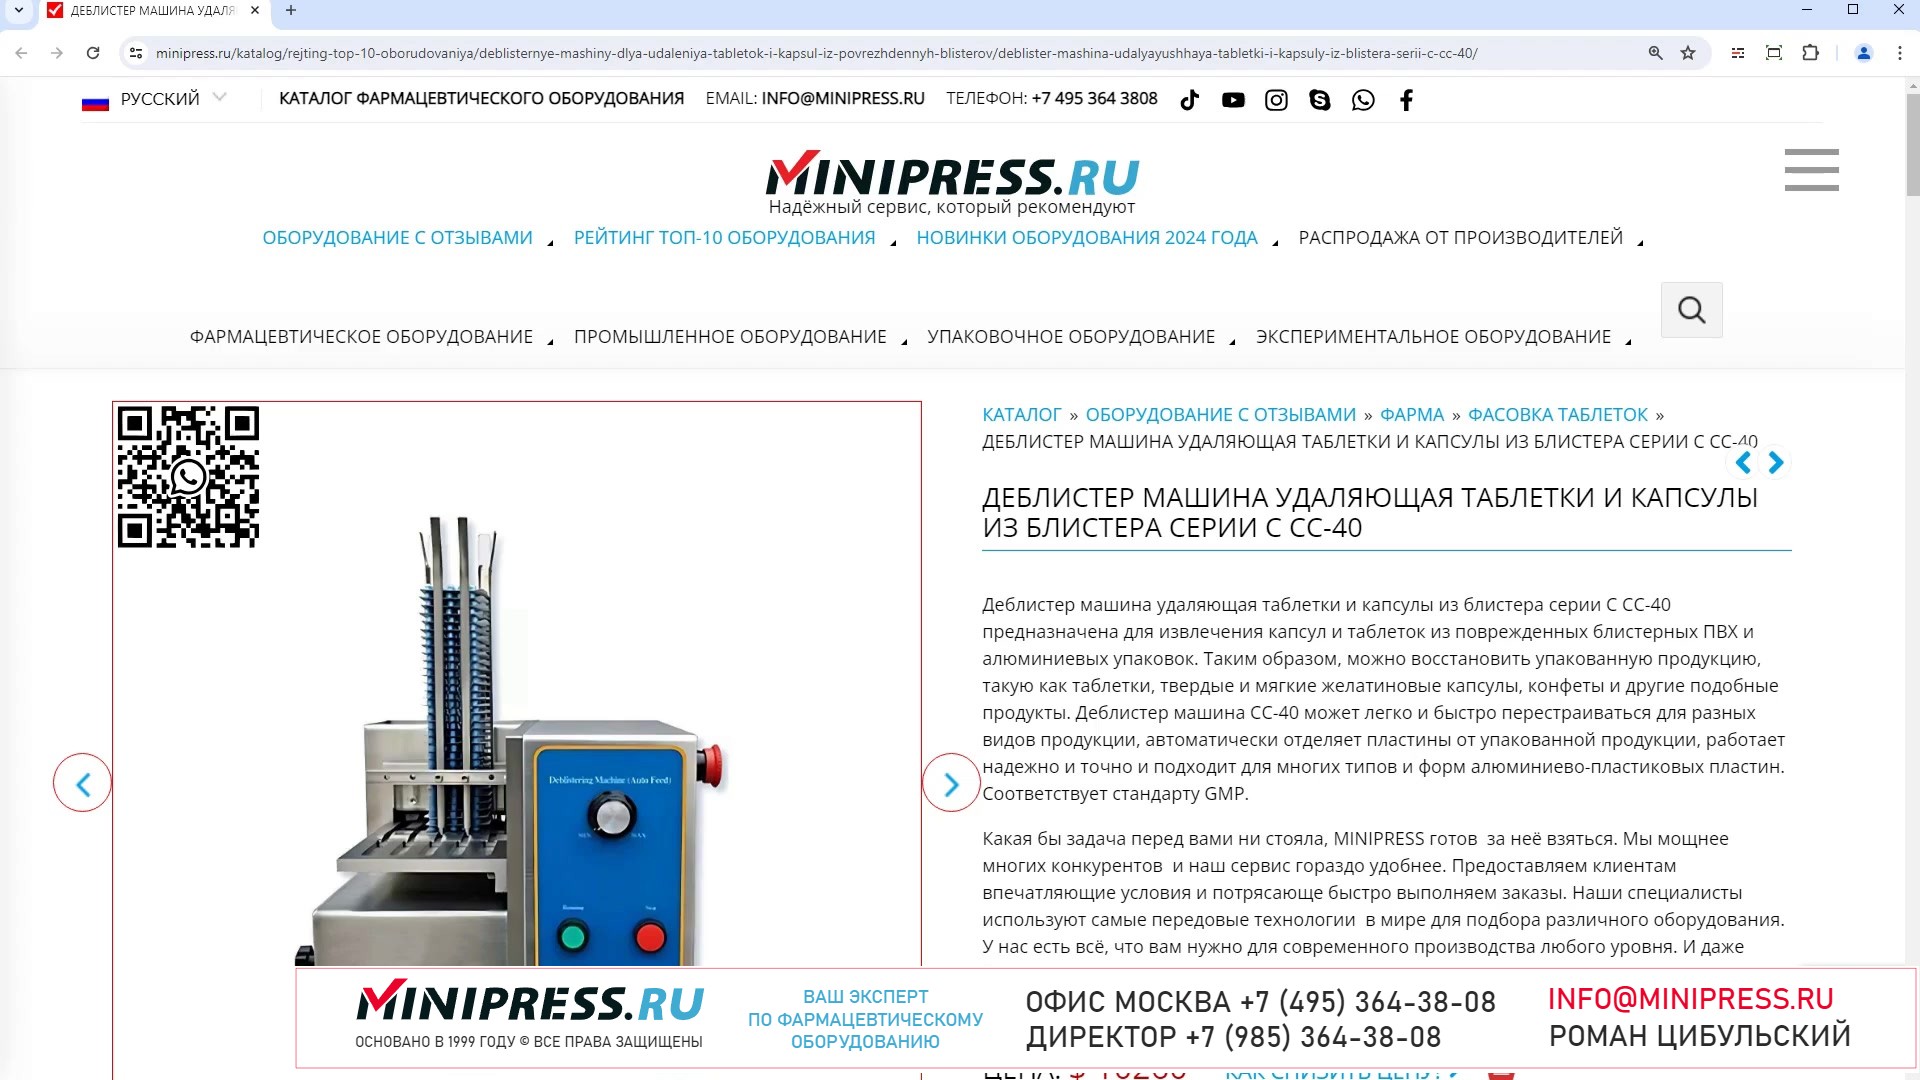 Minipress.ru Деблистер машина удаляющая таблетки и капсулы из блистера серии C CC-40